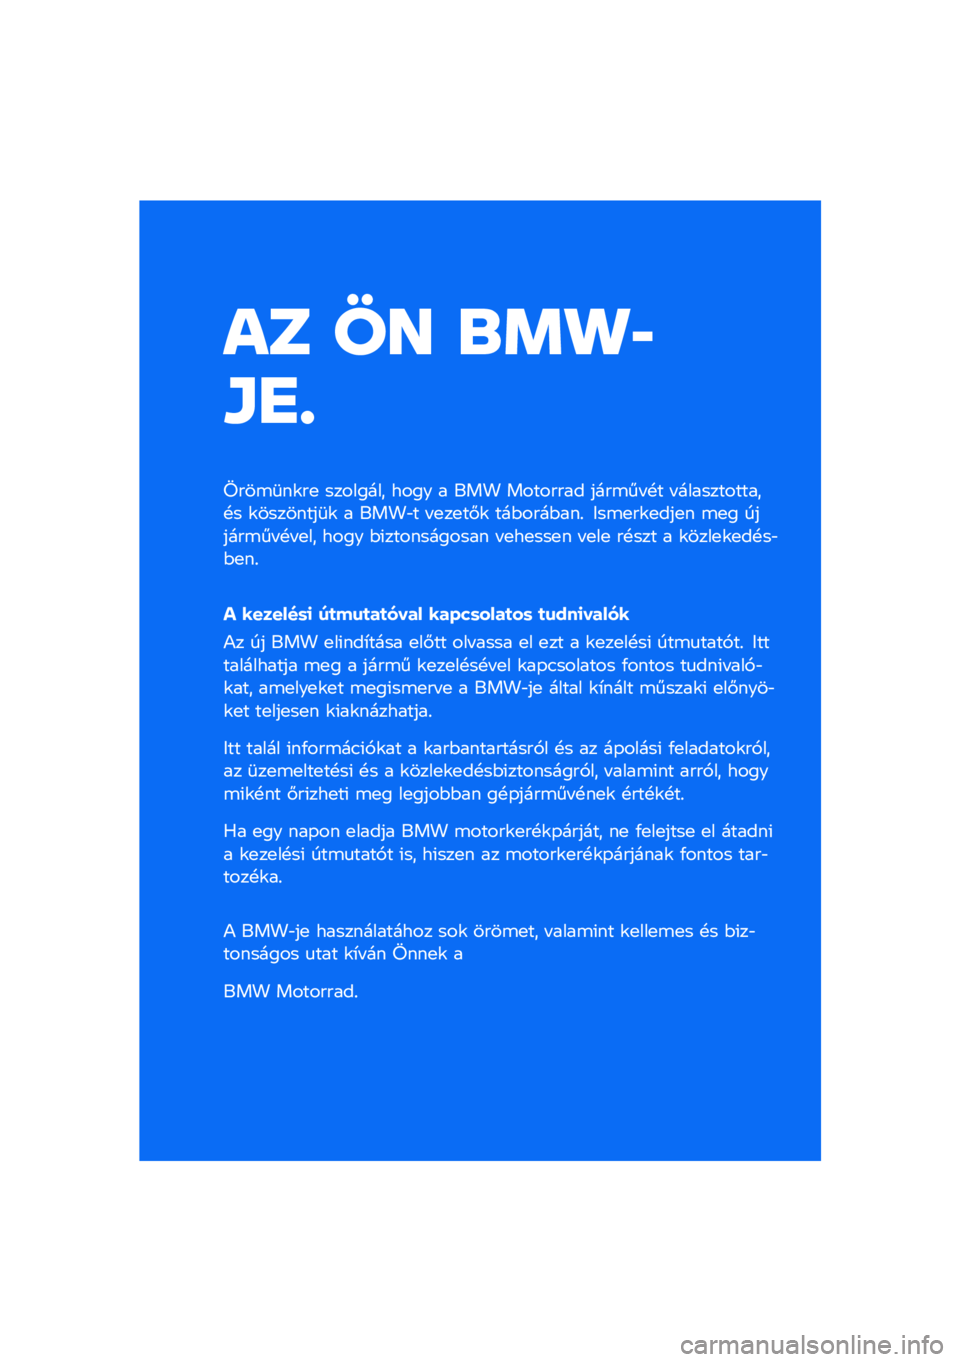 BMW MOTORRAD C 400 GT 2020  Kezelési útmutató (in Hungarian) �� �� �\b�	�
�
�\f�
�
����\b�	��\f��
 �������� ���� � ��� �������� ����\b�� �!� � ������������!� �\f��������	�\f � ����"� � �
��
��#�\